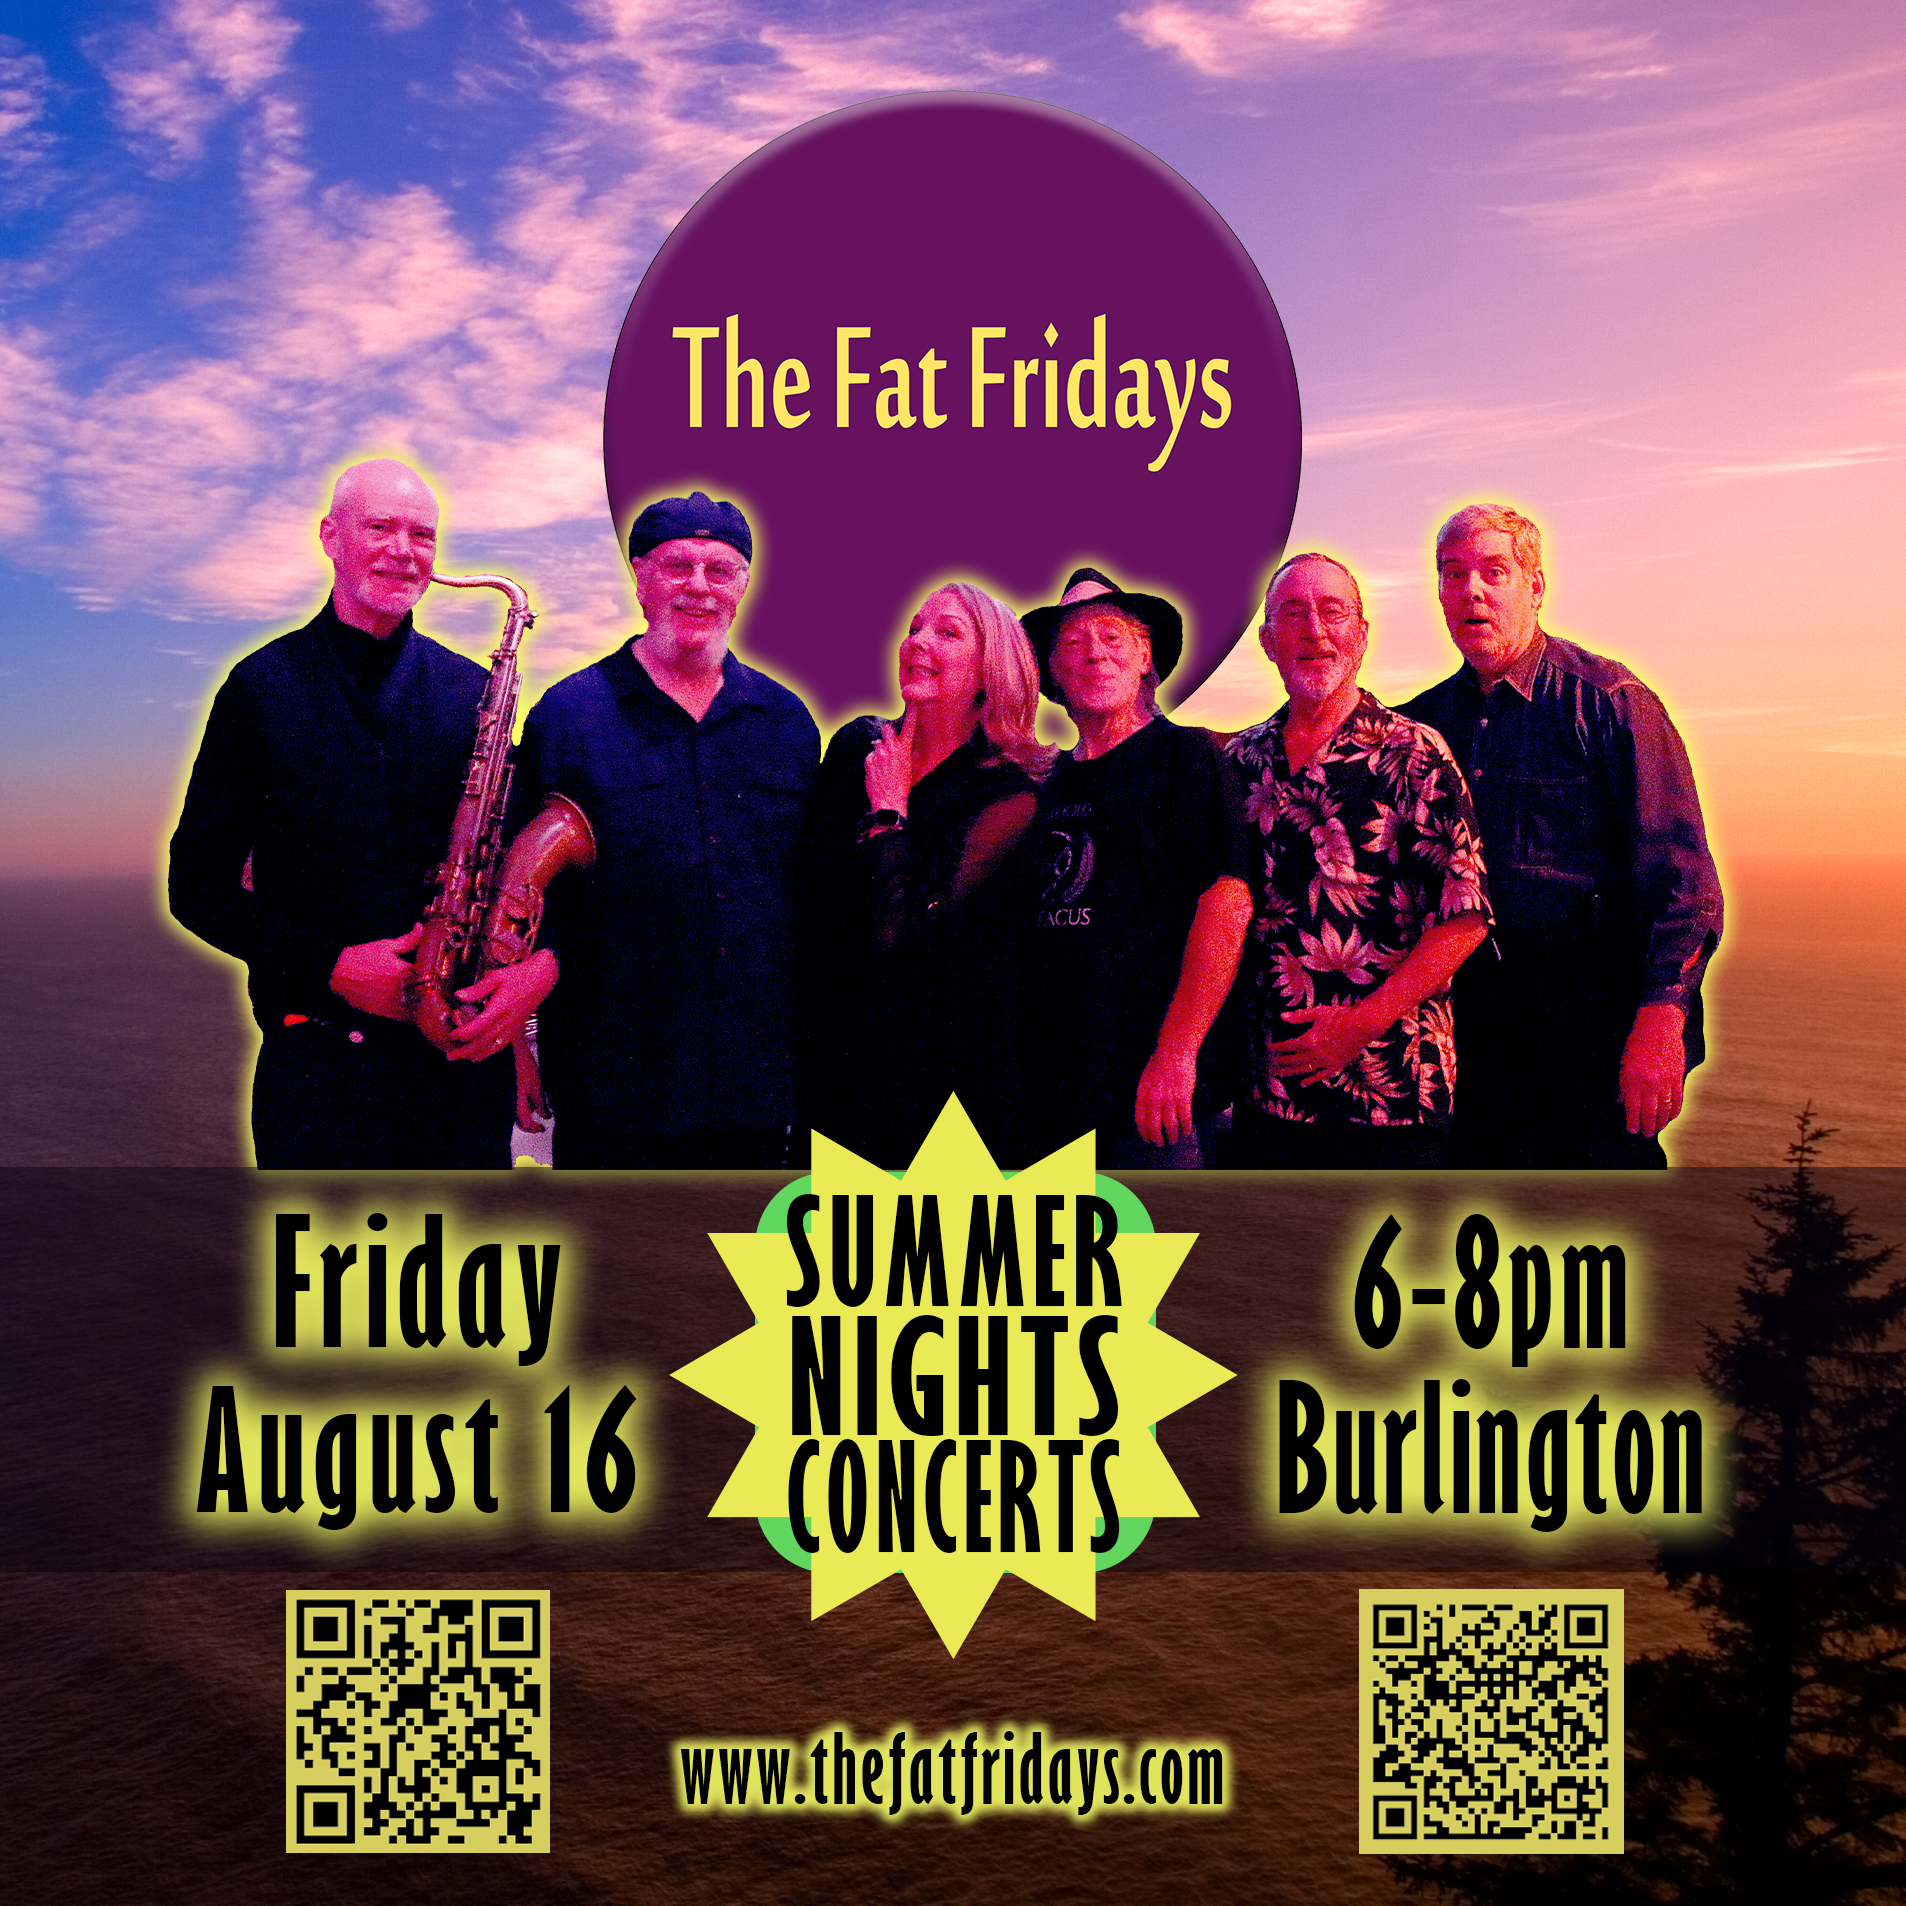 The Fat Fridays at Burlington Summer Nights Concerts